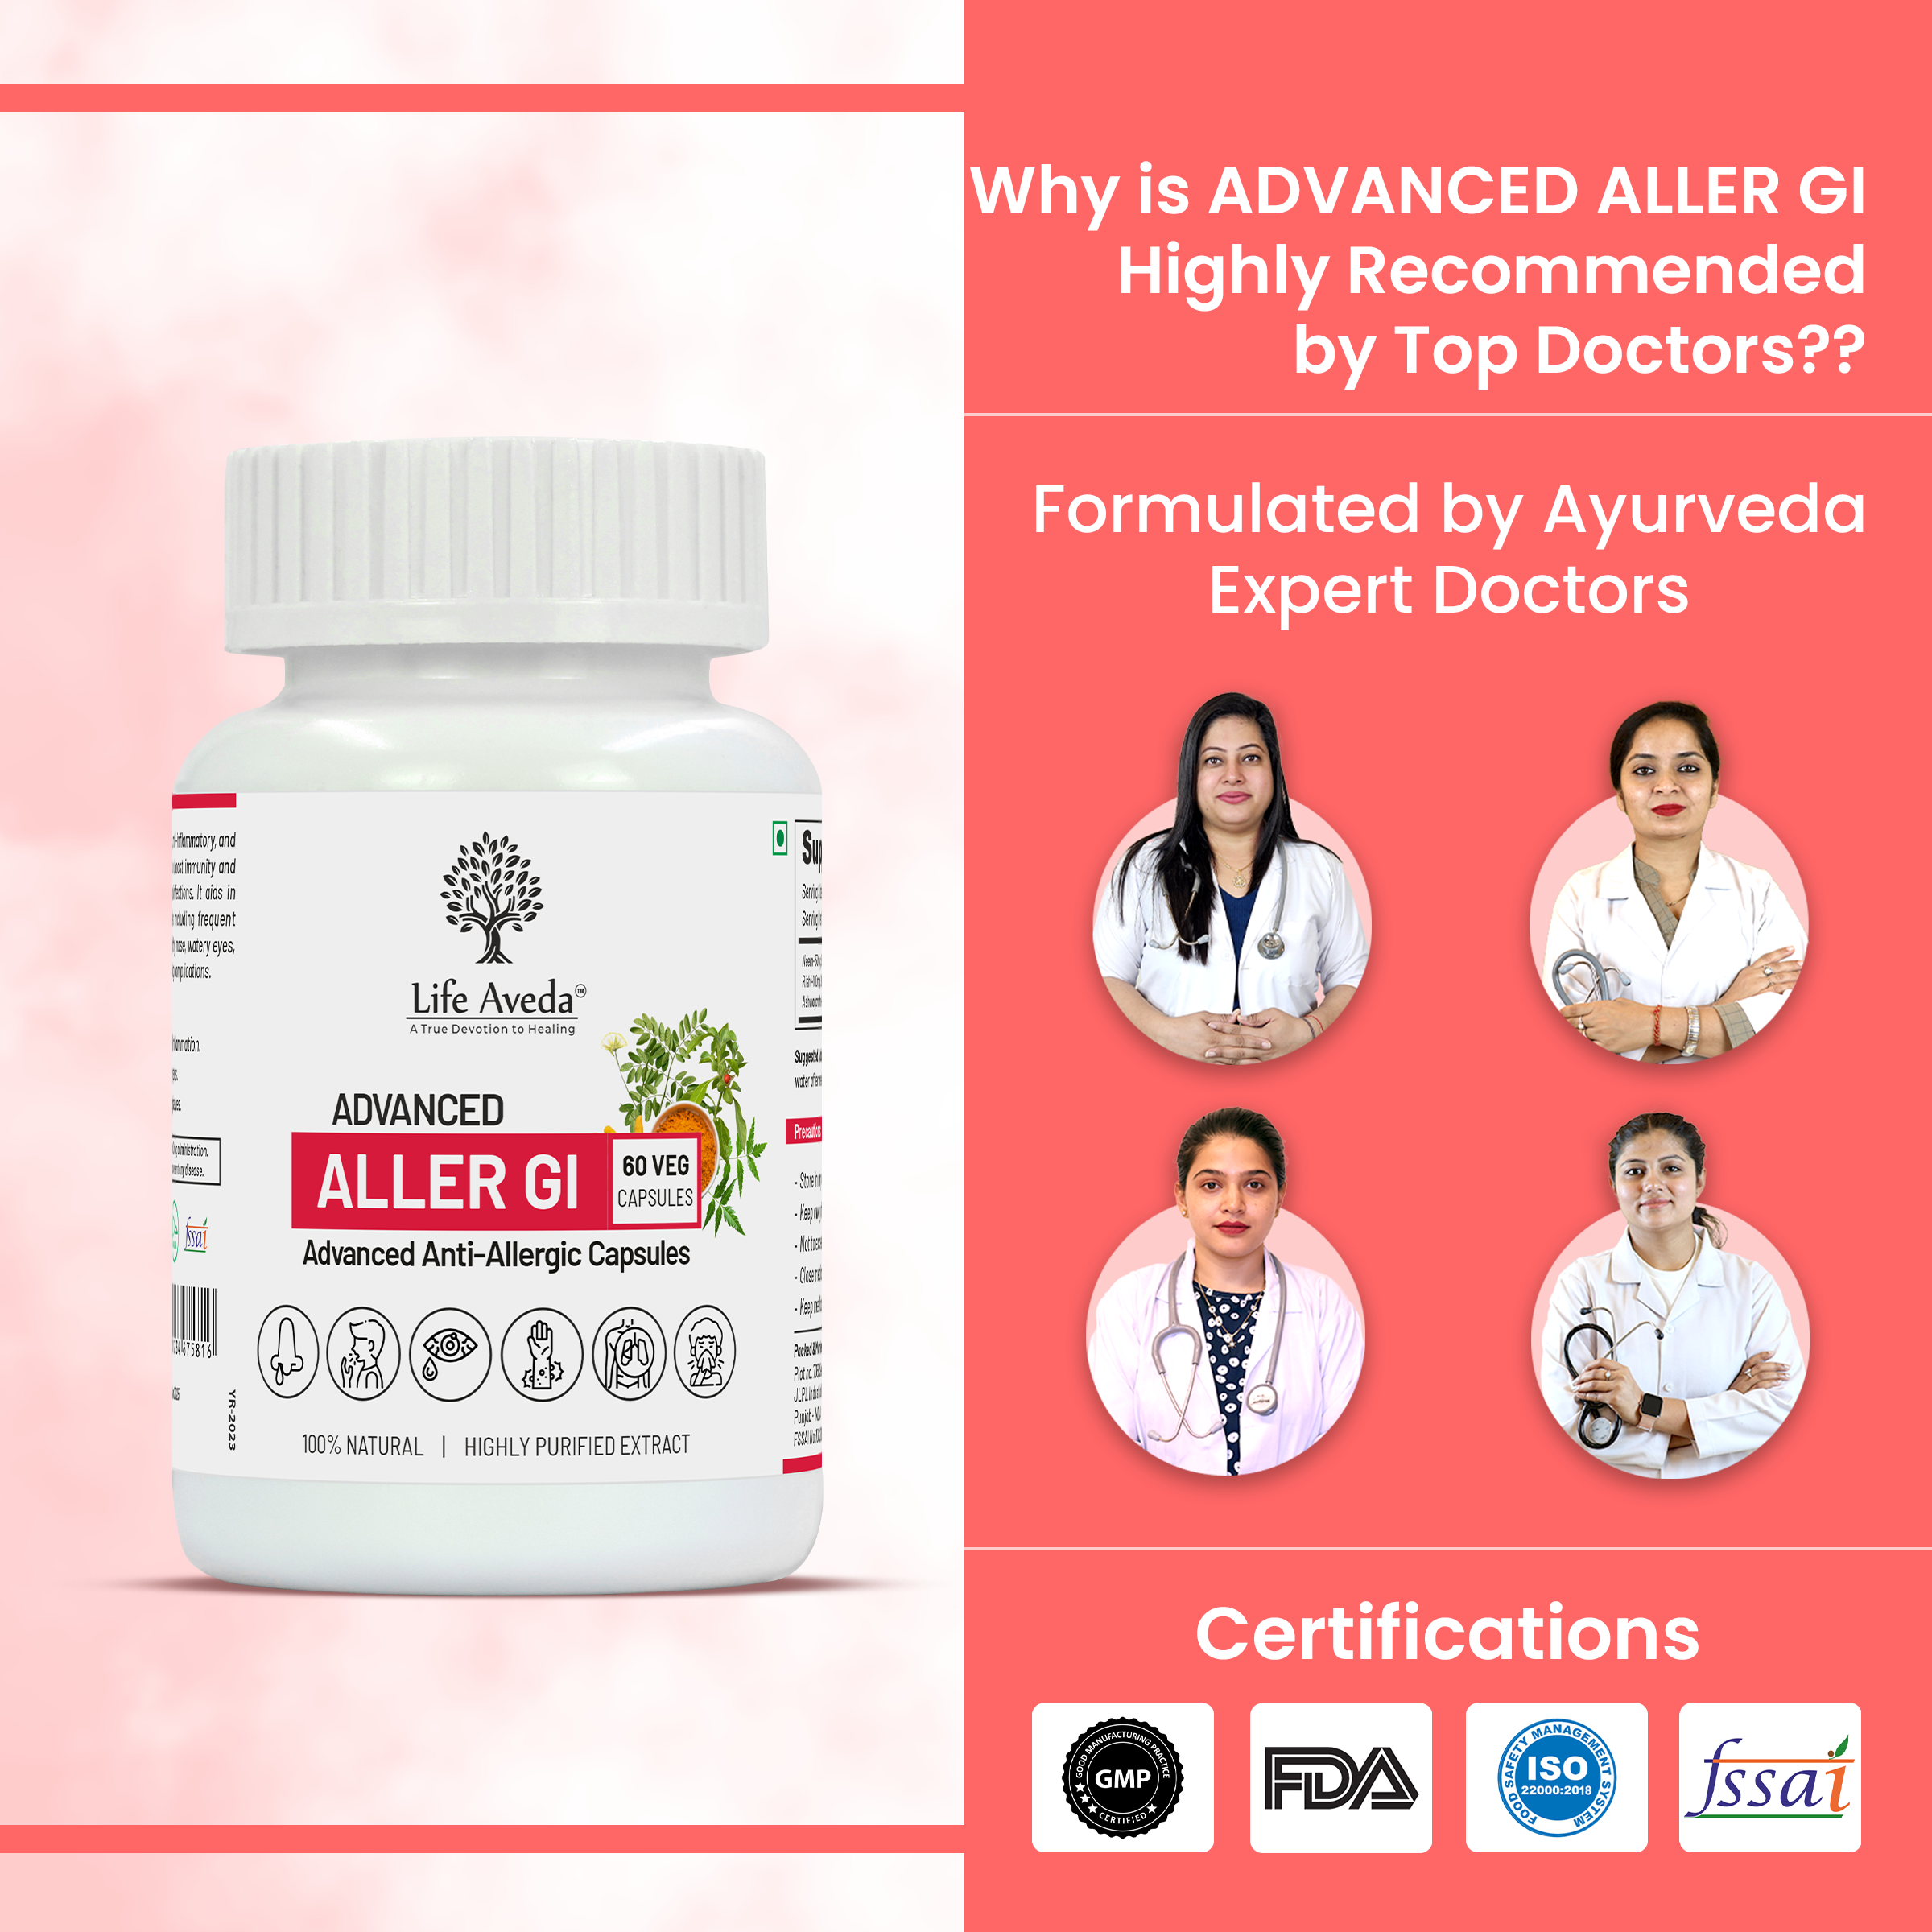 Life Aveda Advanced Aller GI Doctors Certifications